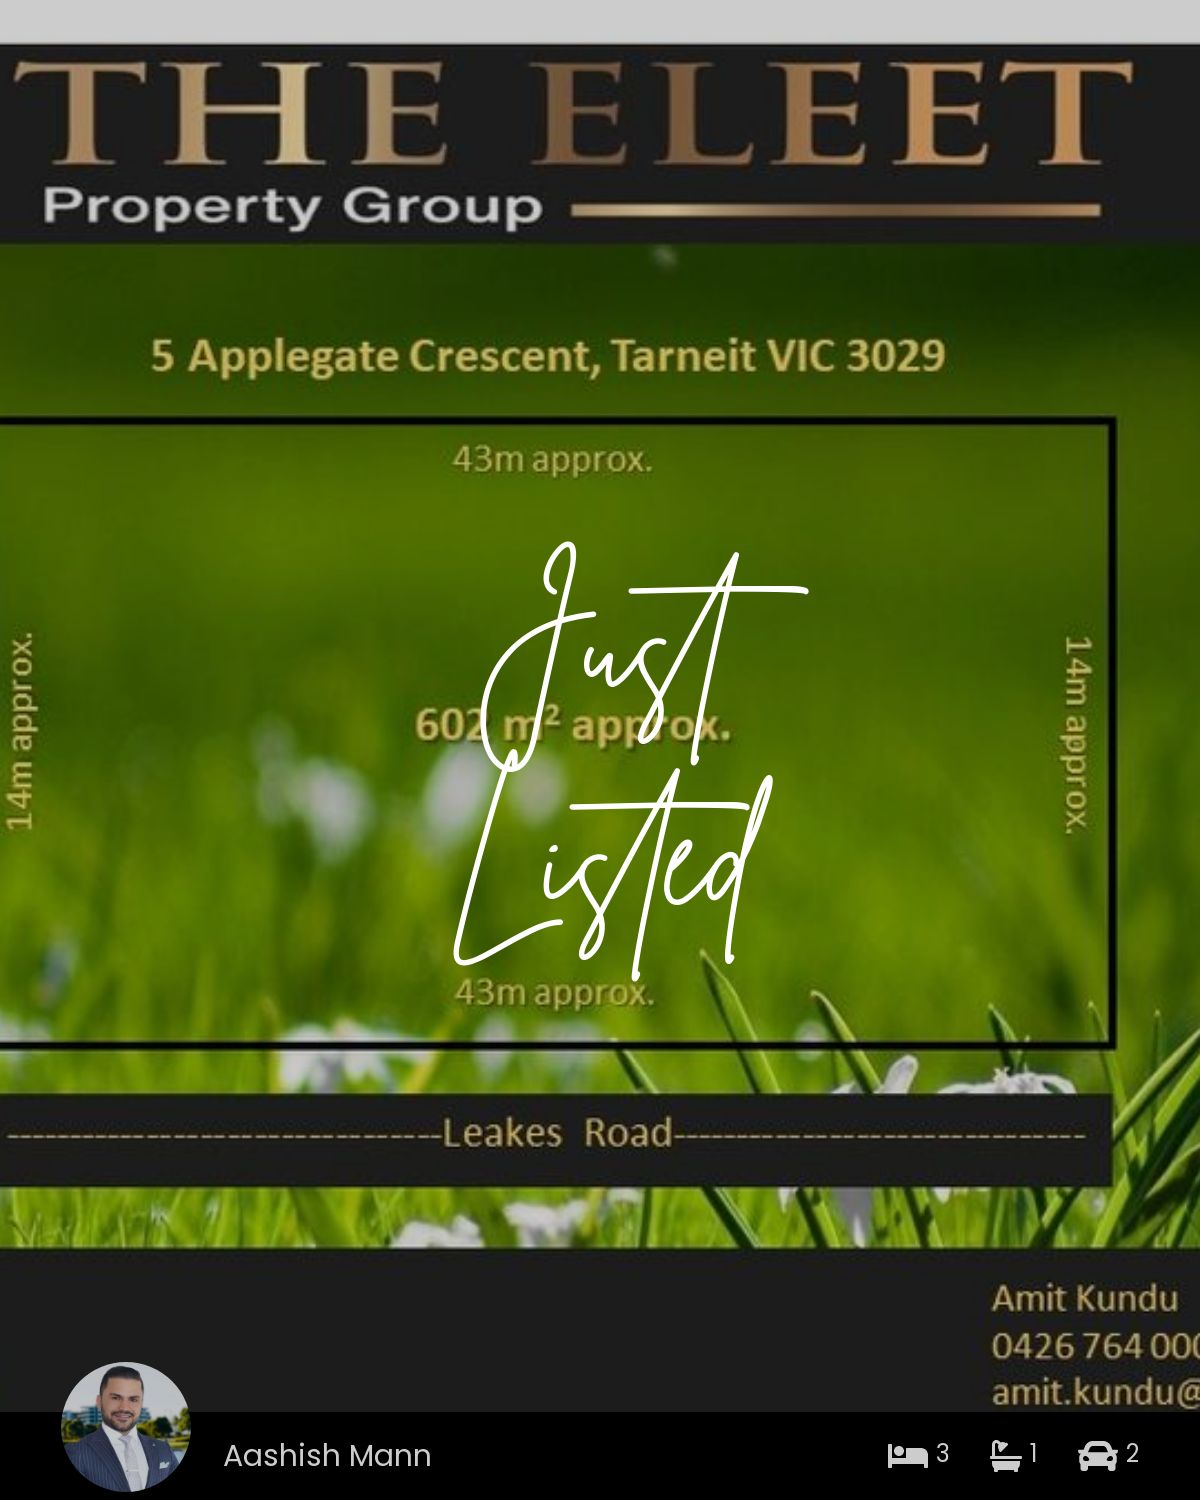 5 Applegate Crescent, Tarneit, VIC 3029 | Realty.com.au